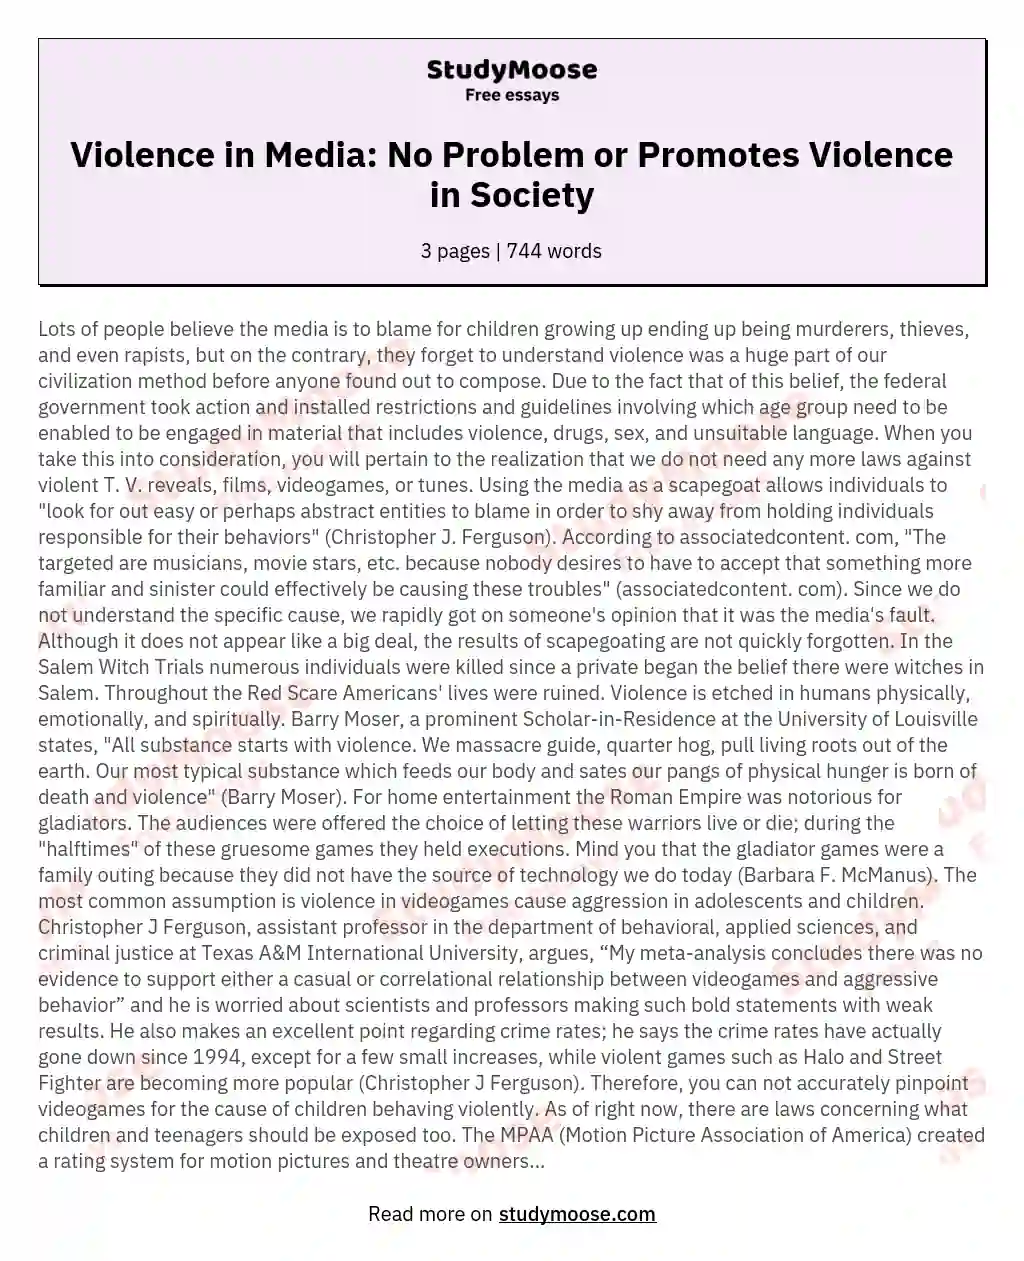 media promotes violence in society essay